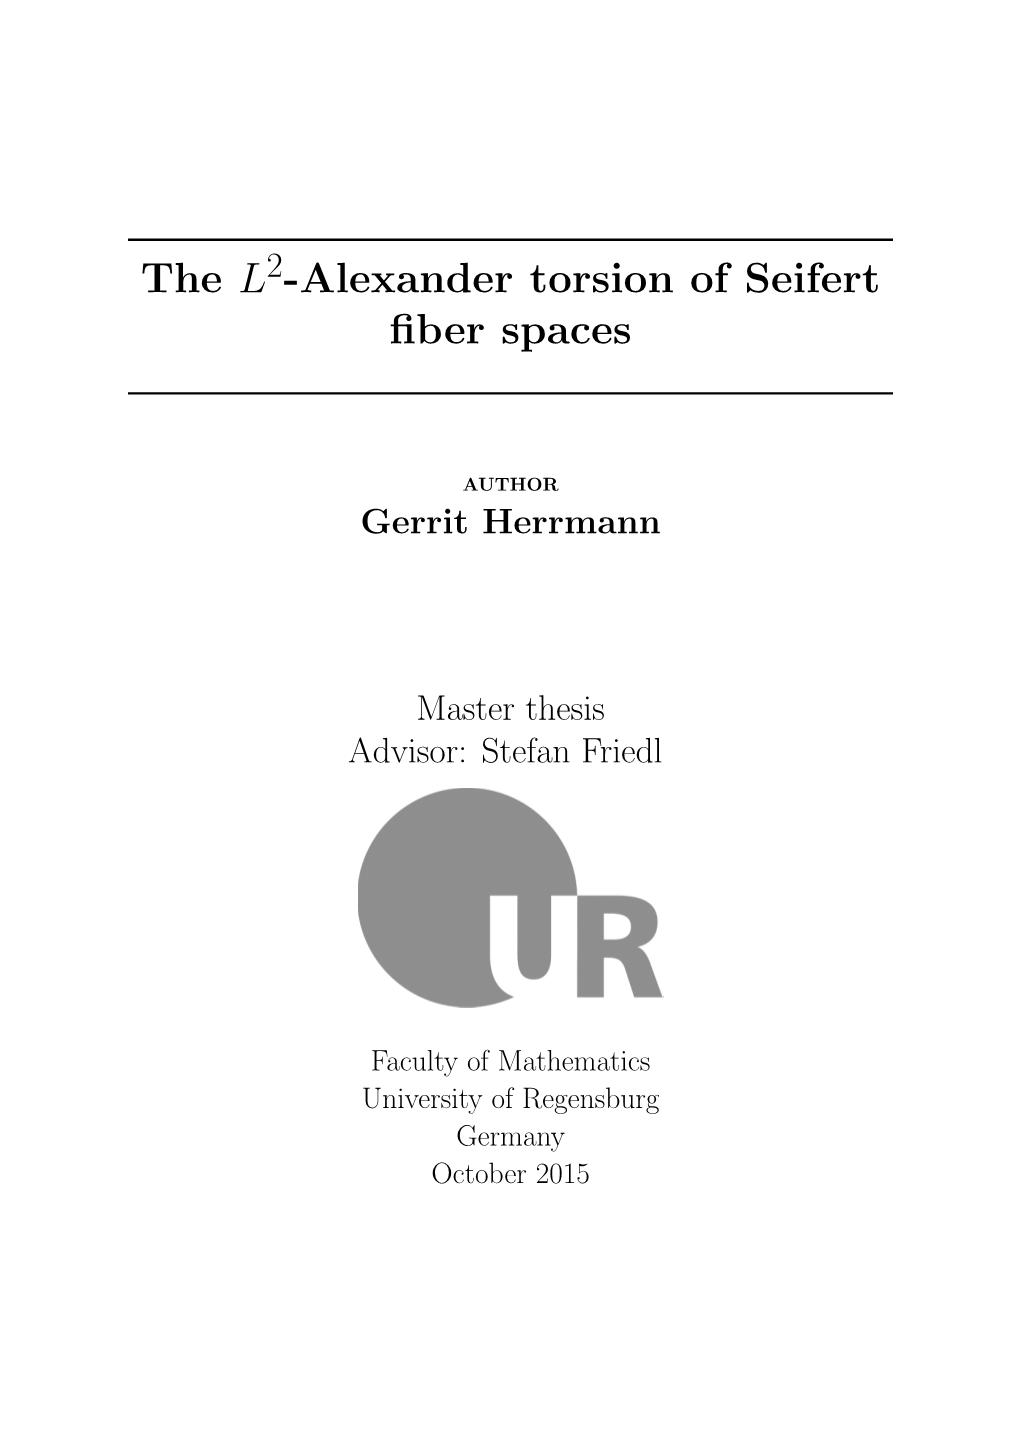 The L -Alexander Torsion of Seifert Fiber Spaces